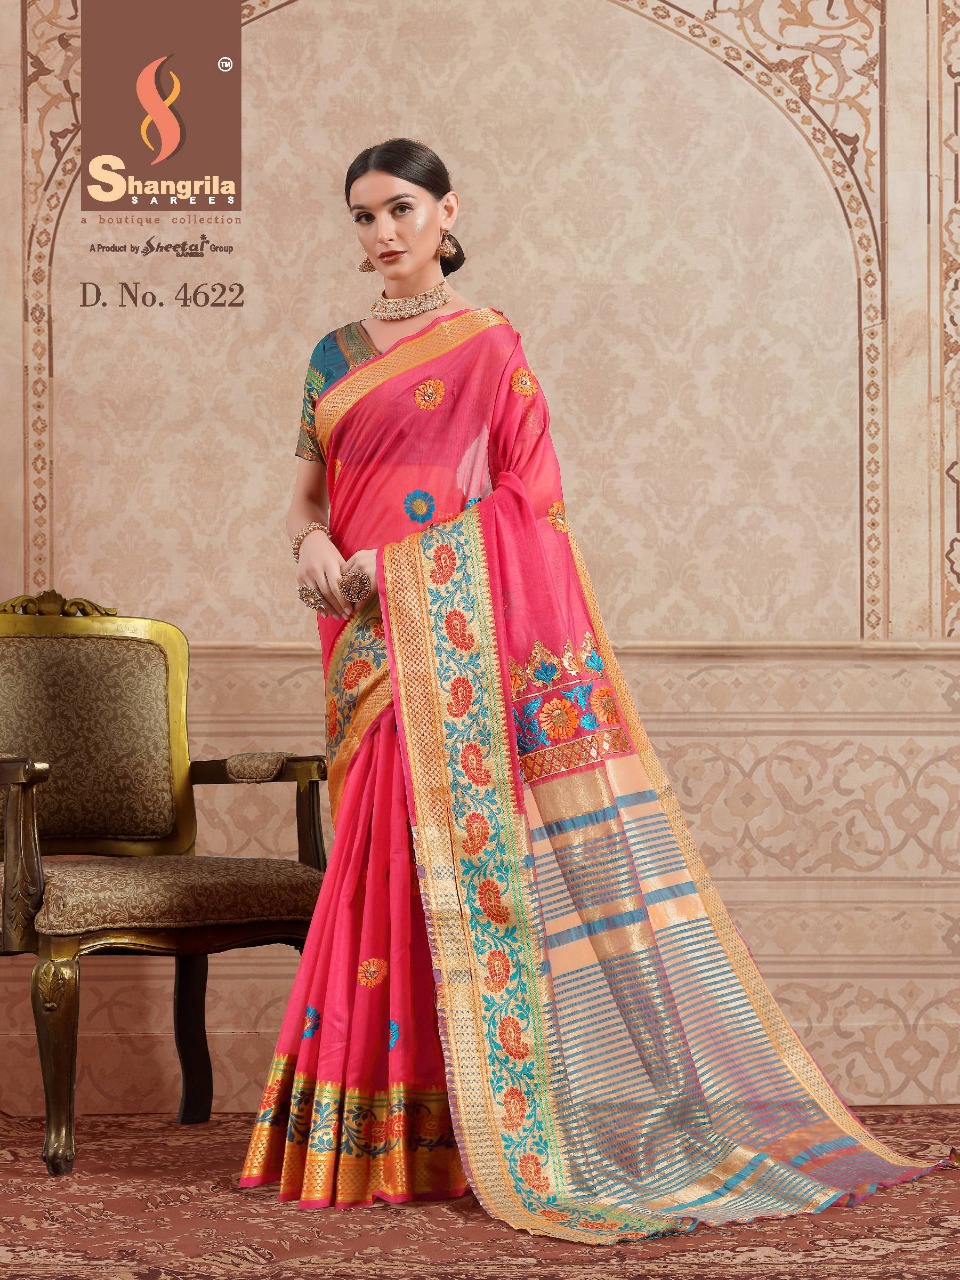 shangrila namrata cotton colorful fancy collection of sarees